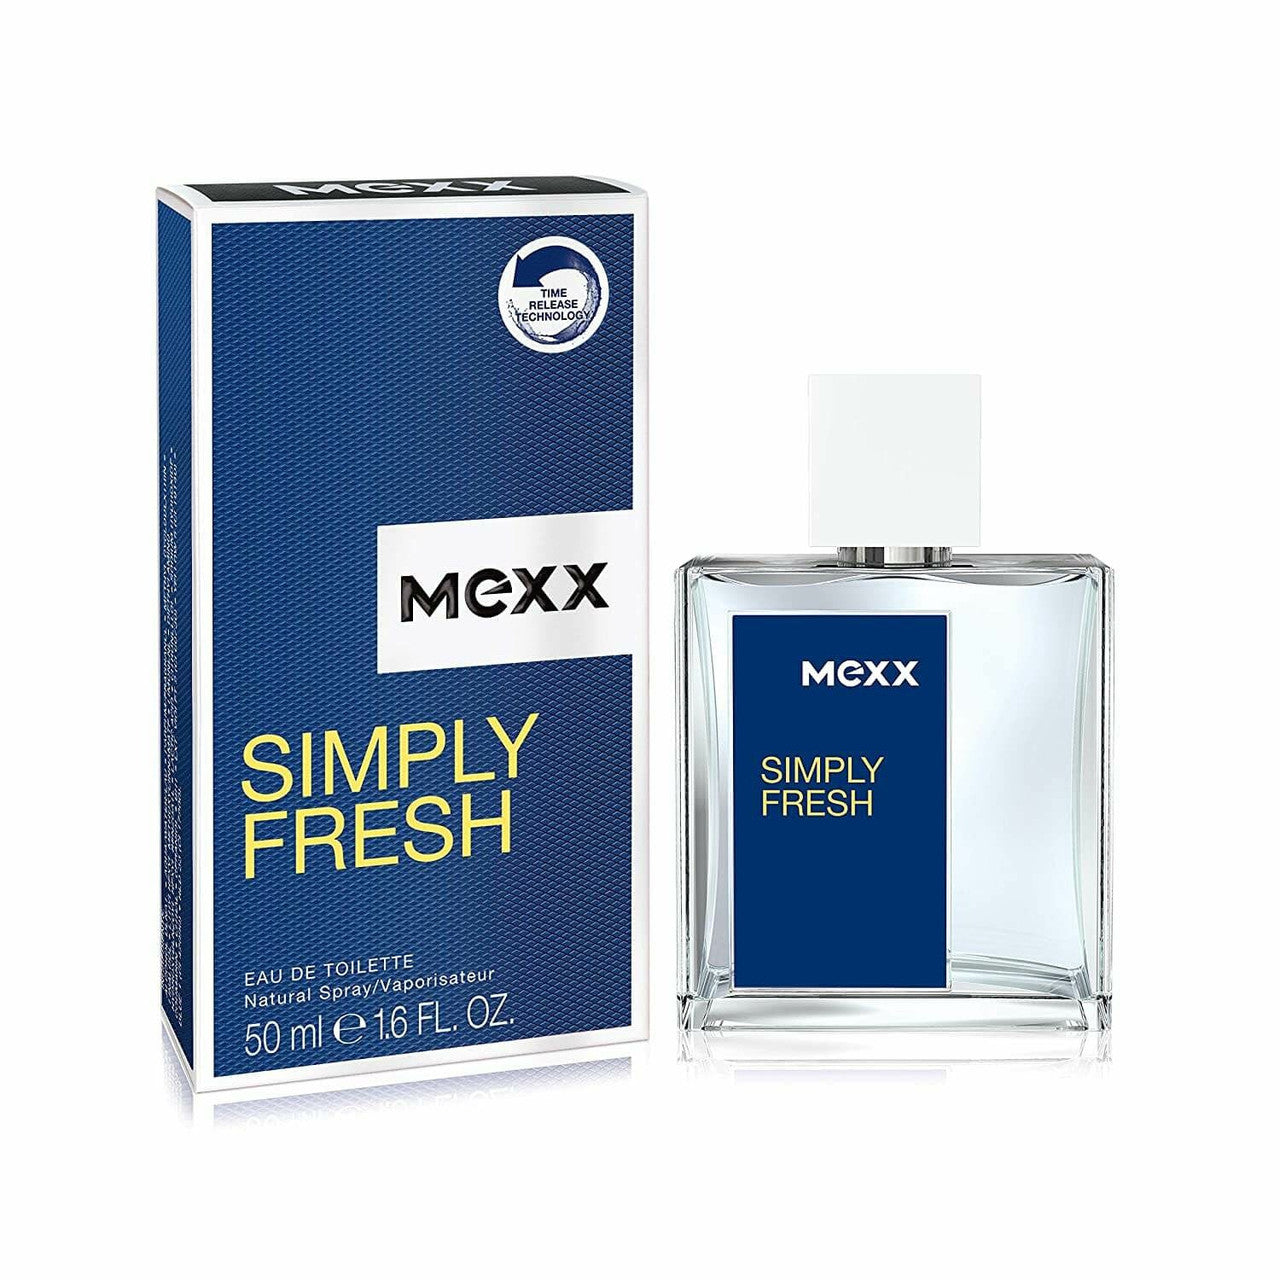 Mexx Simply Fresh Eau de Toilette 50ml Spray